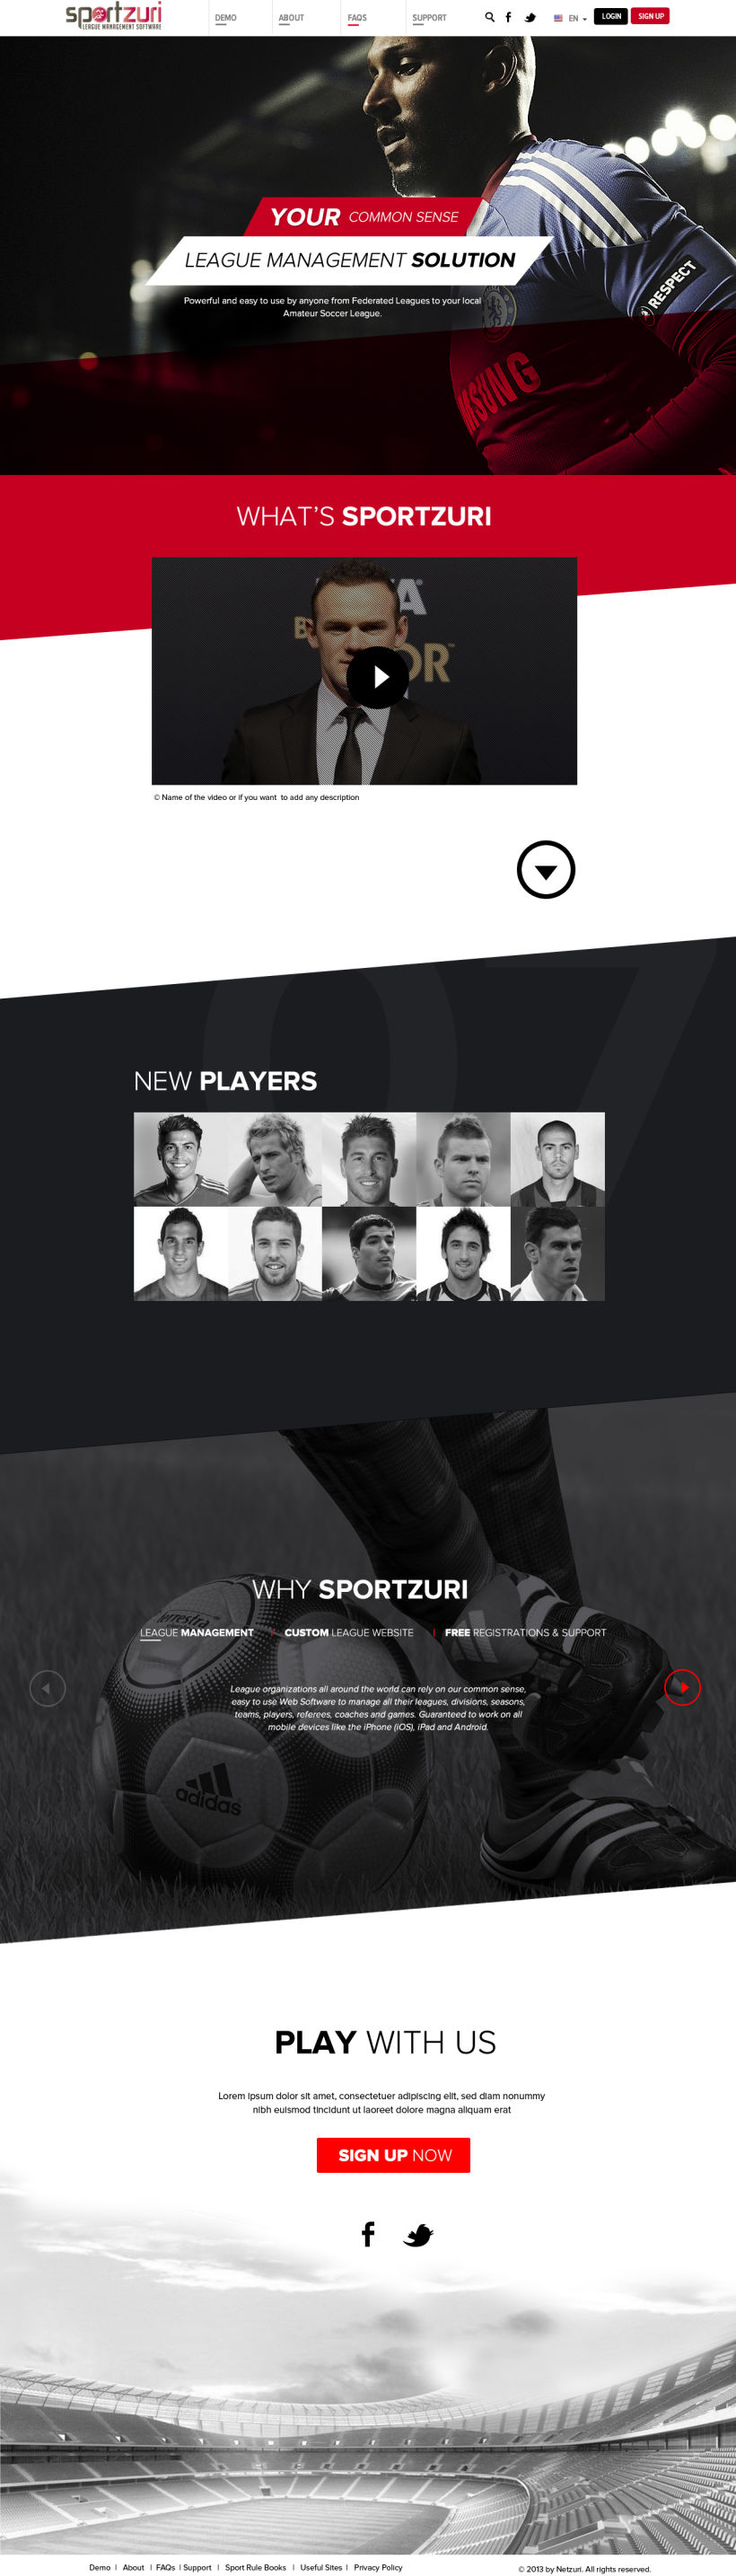 Sportzuri Web design y UX 0